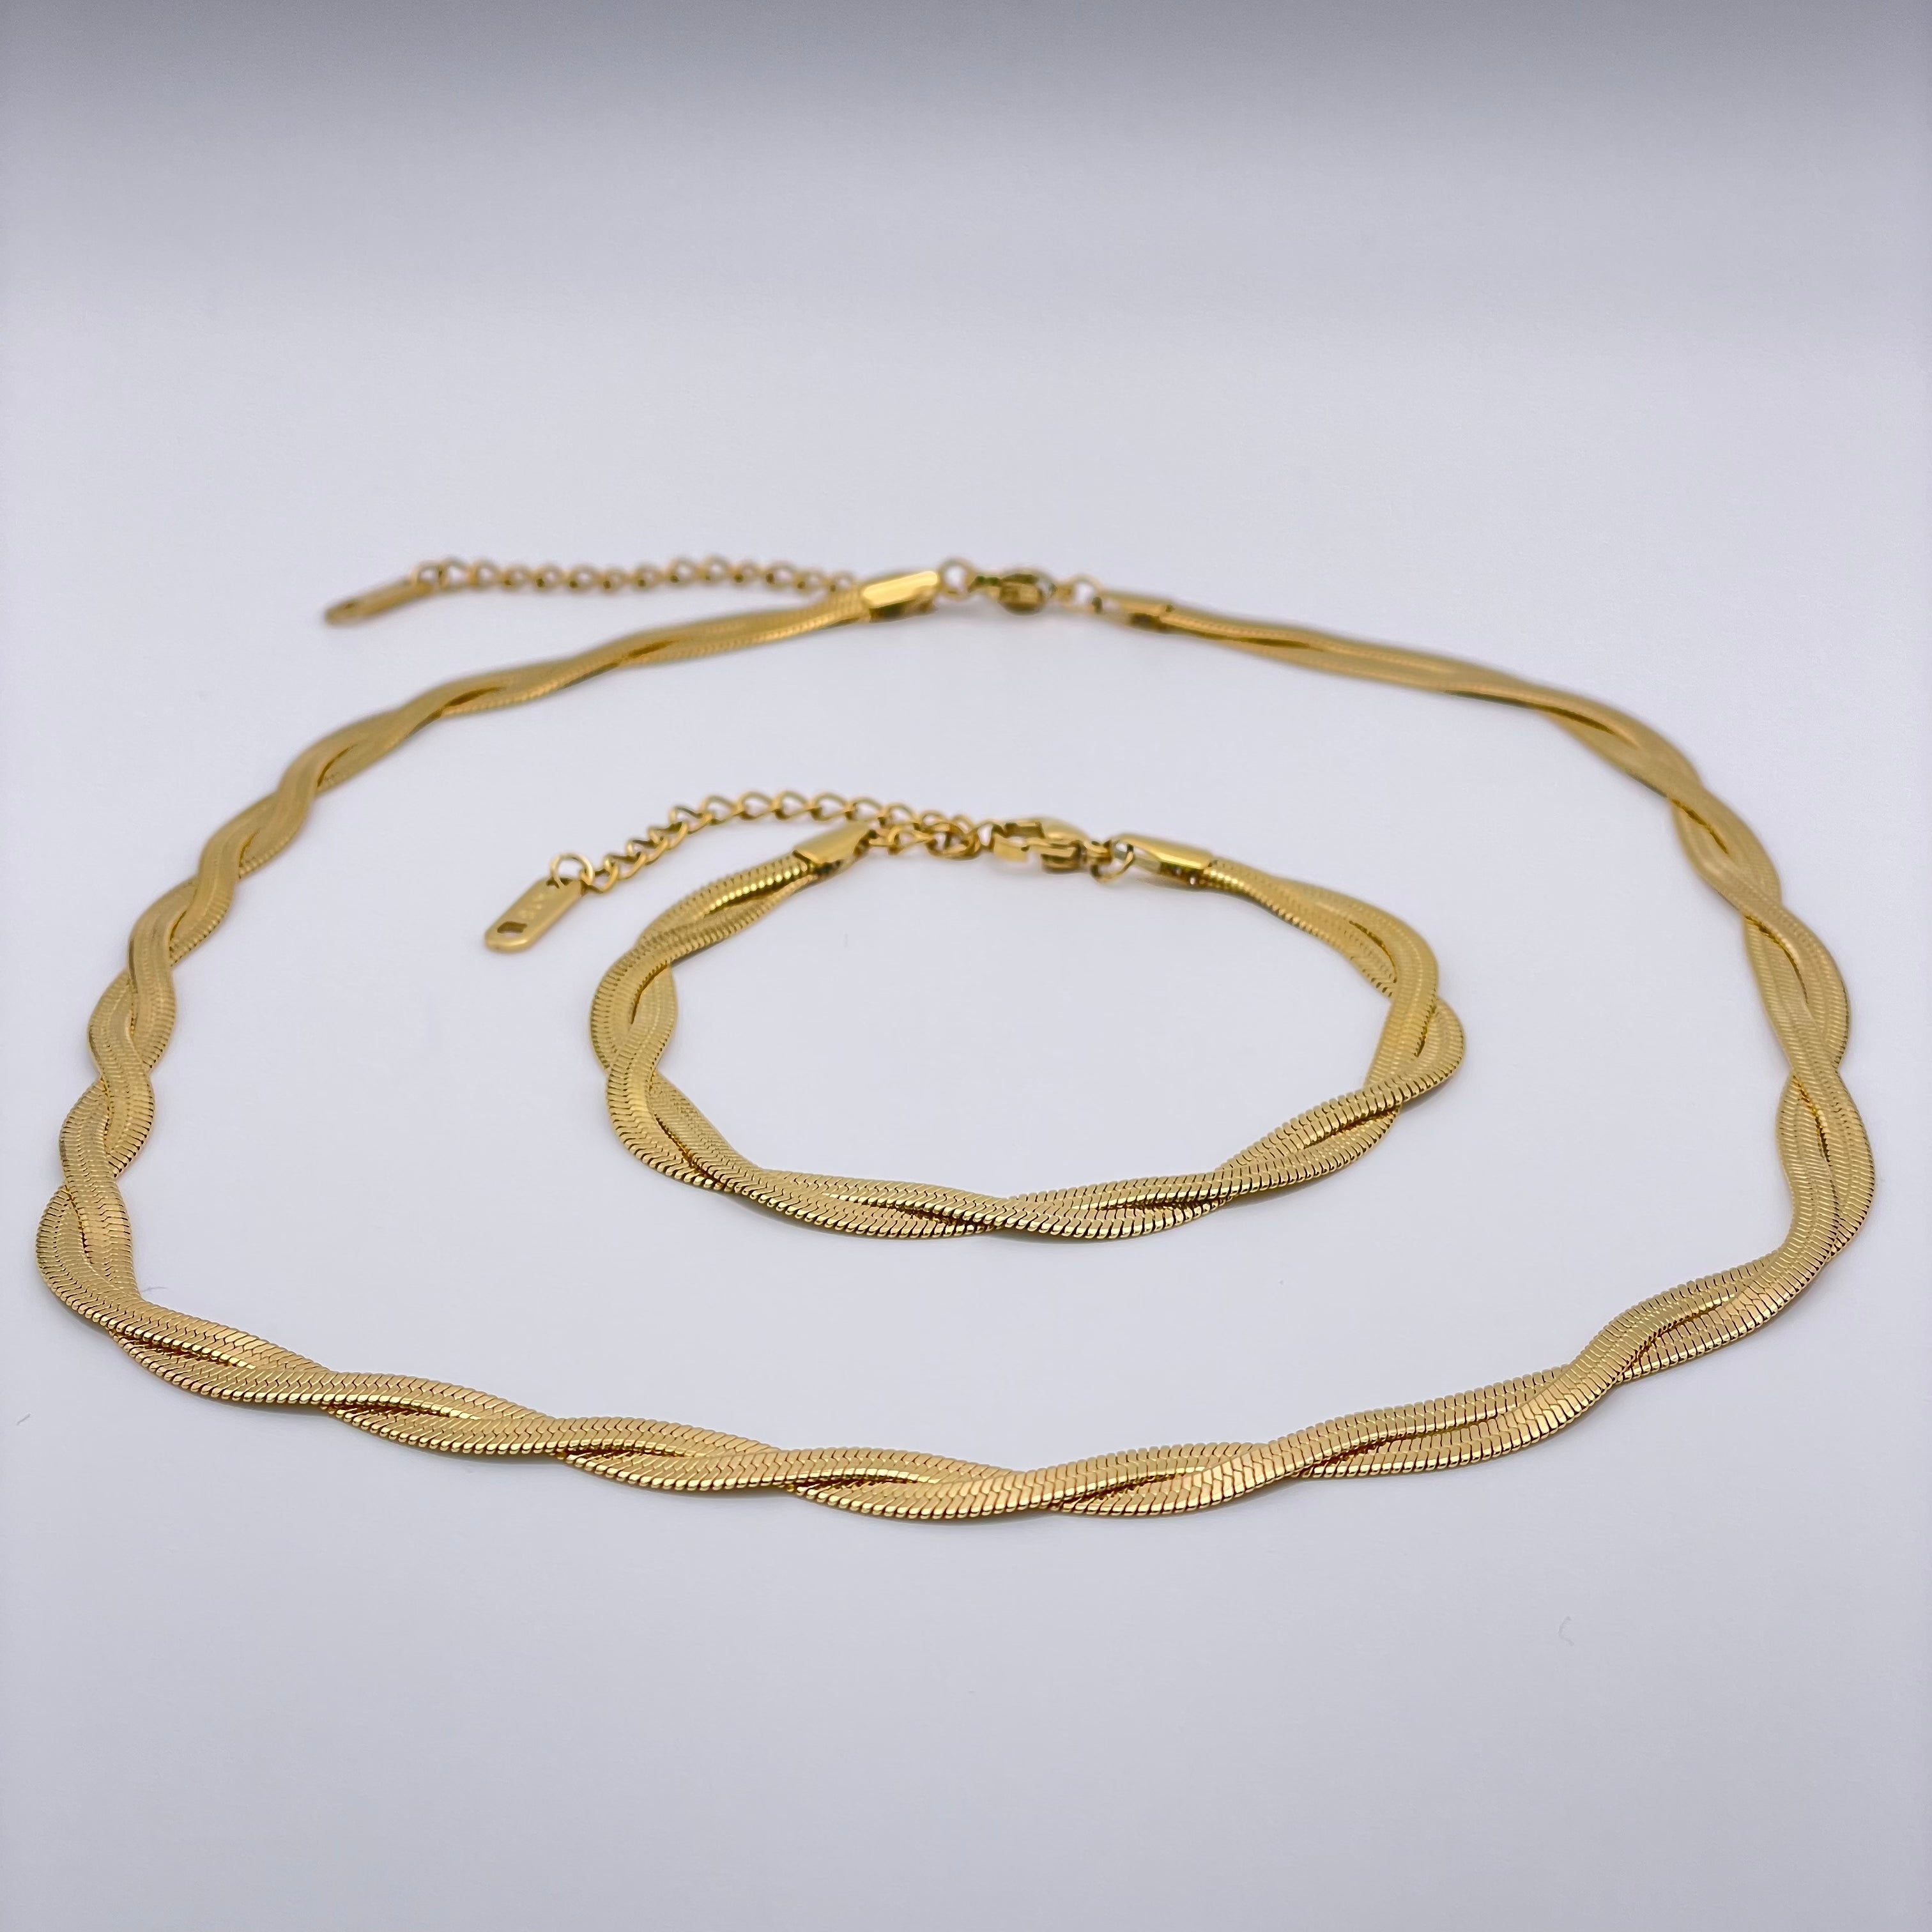 Vintage Braided Herringbone Chain Necklace - Gold | Garmentory